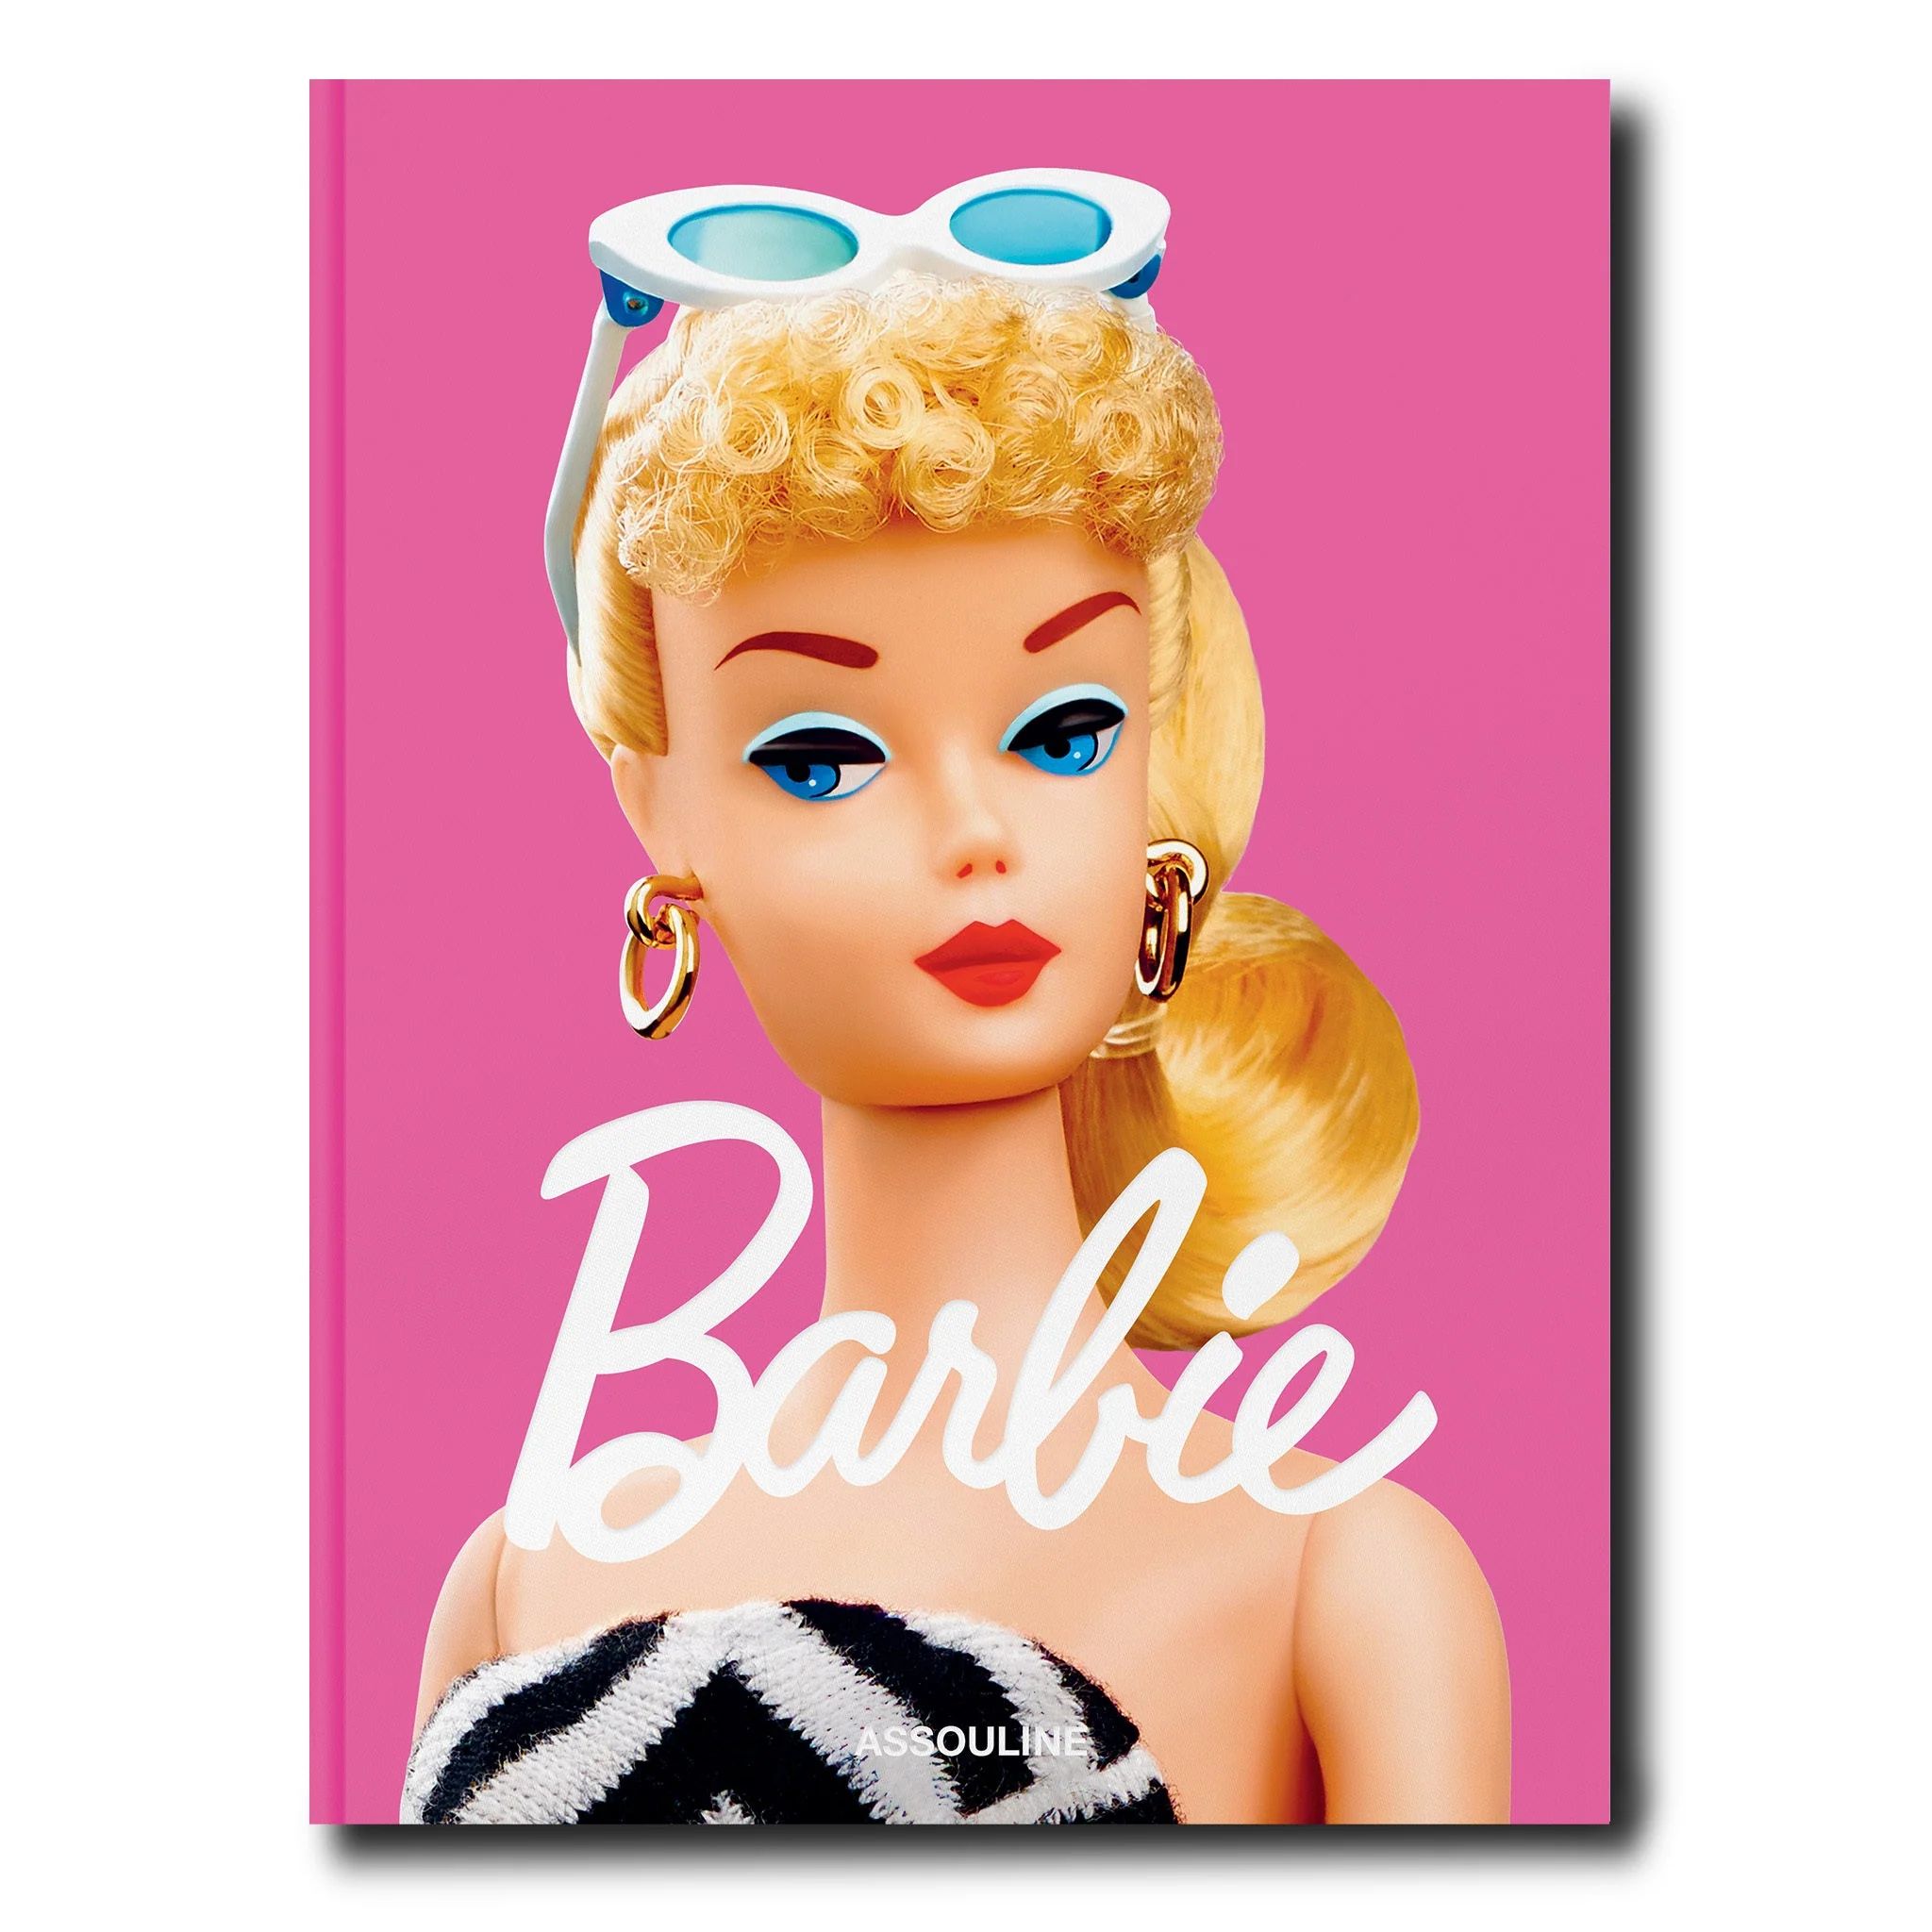 Barbie by Susan Shapiro - Coffee Table Book | ASSOULINE | Assouline